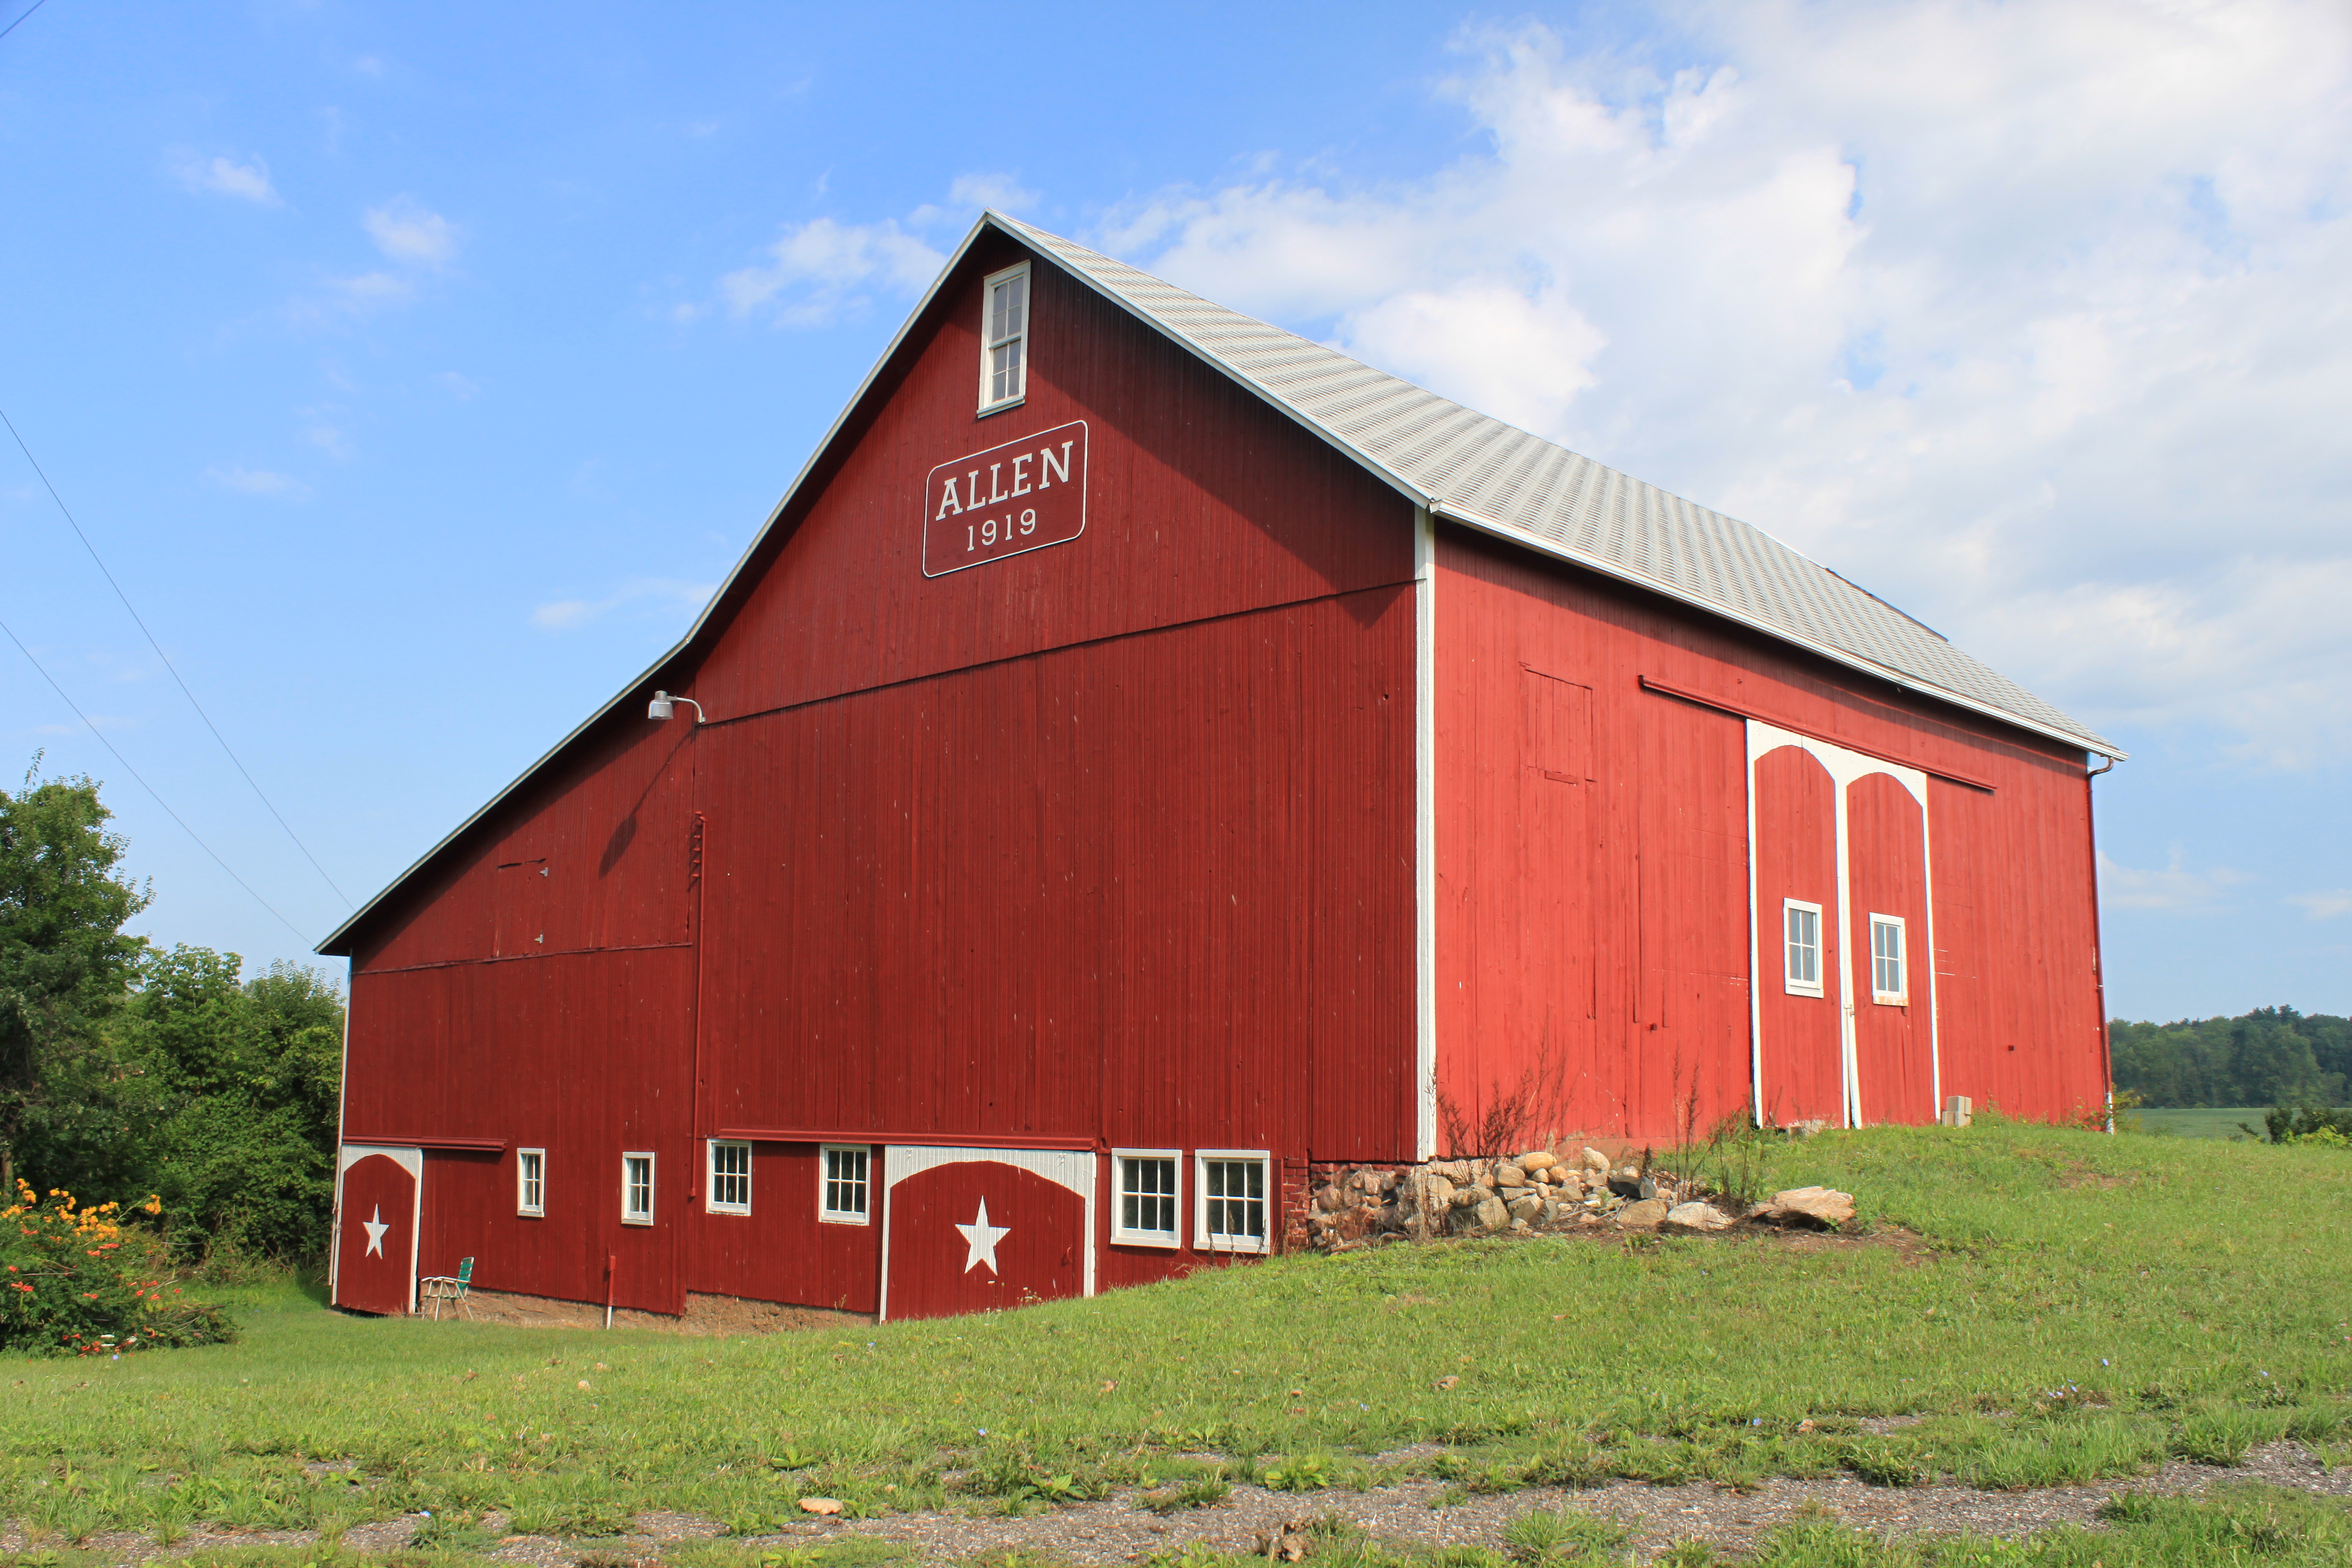 File:Centennial Barn Allen Farm Clinton Michigan.JPG - Wikimedia Commons